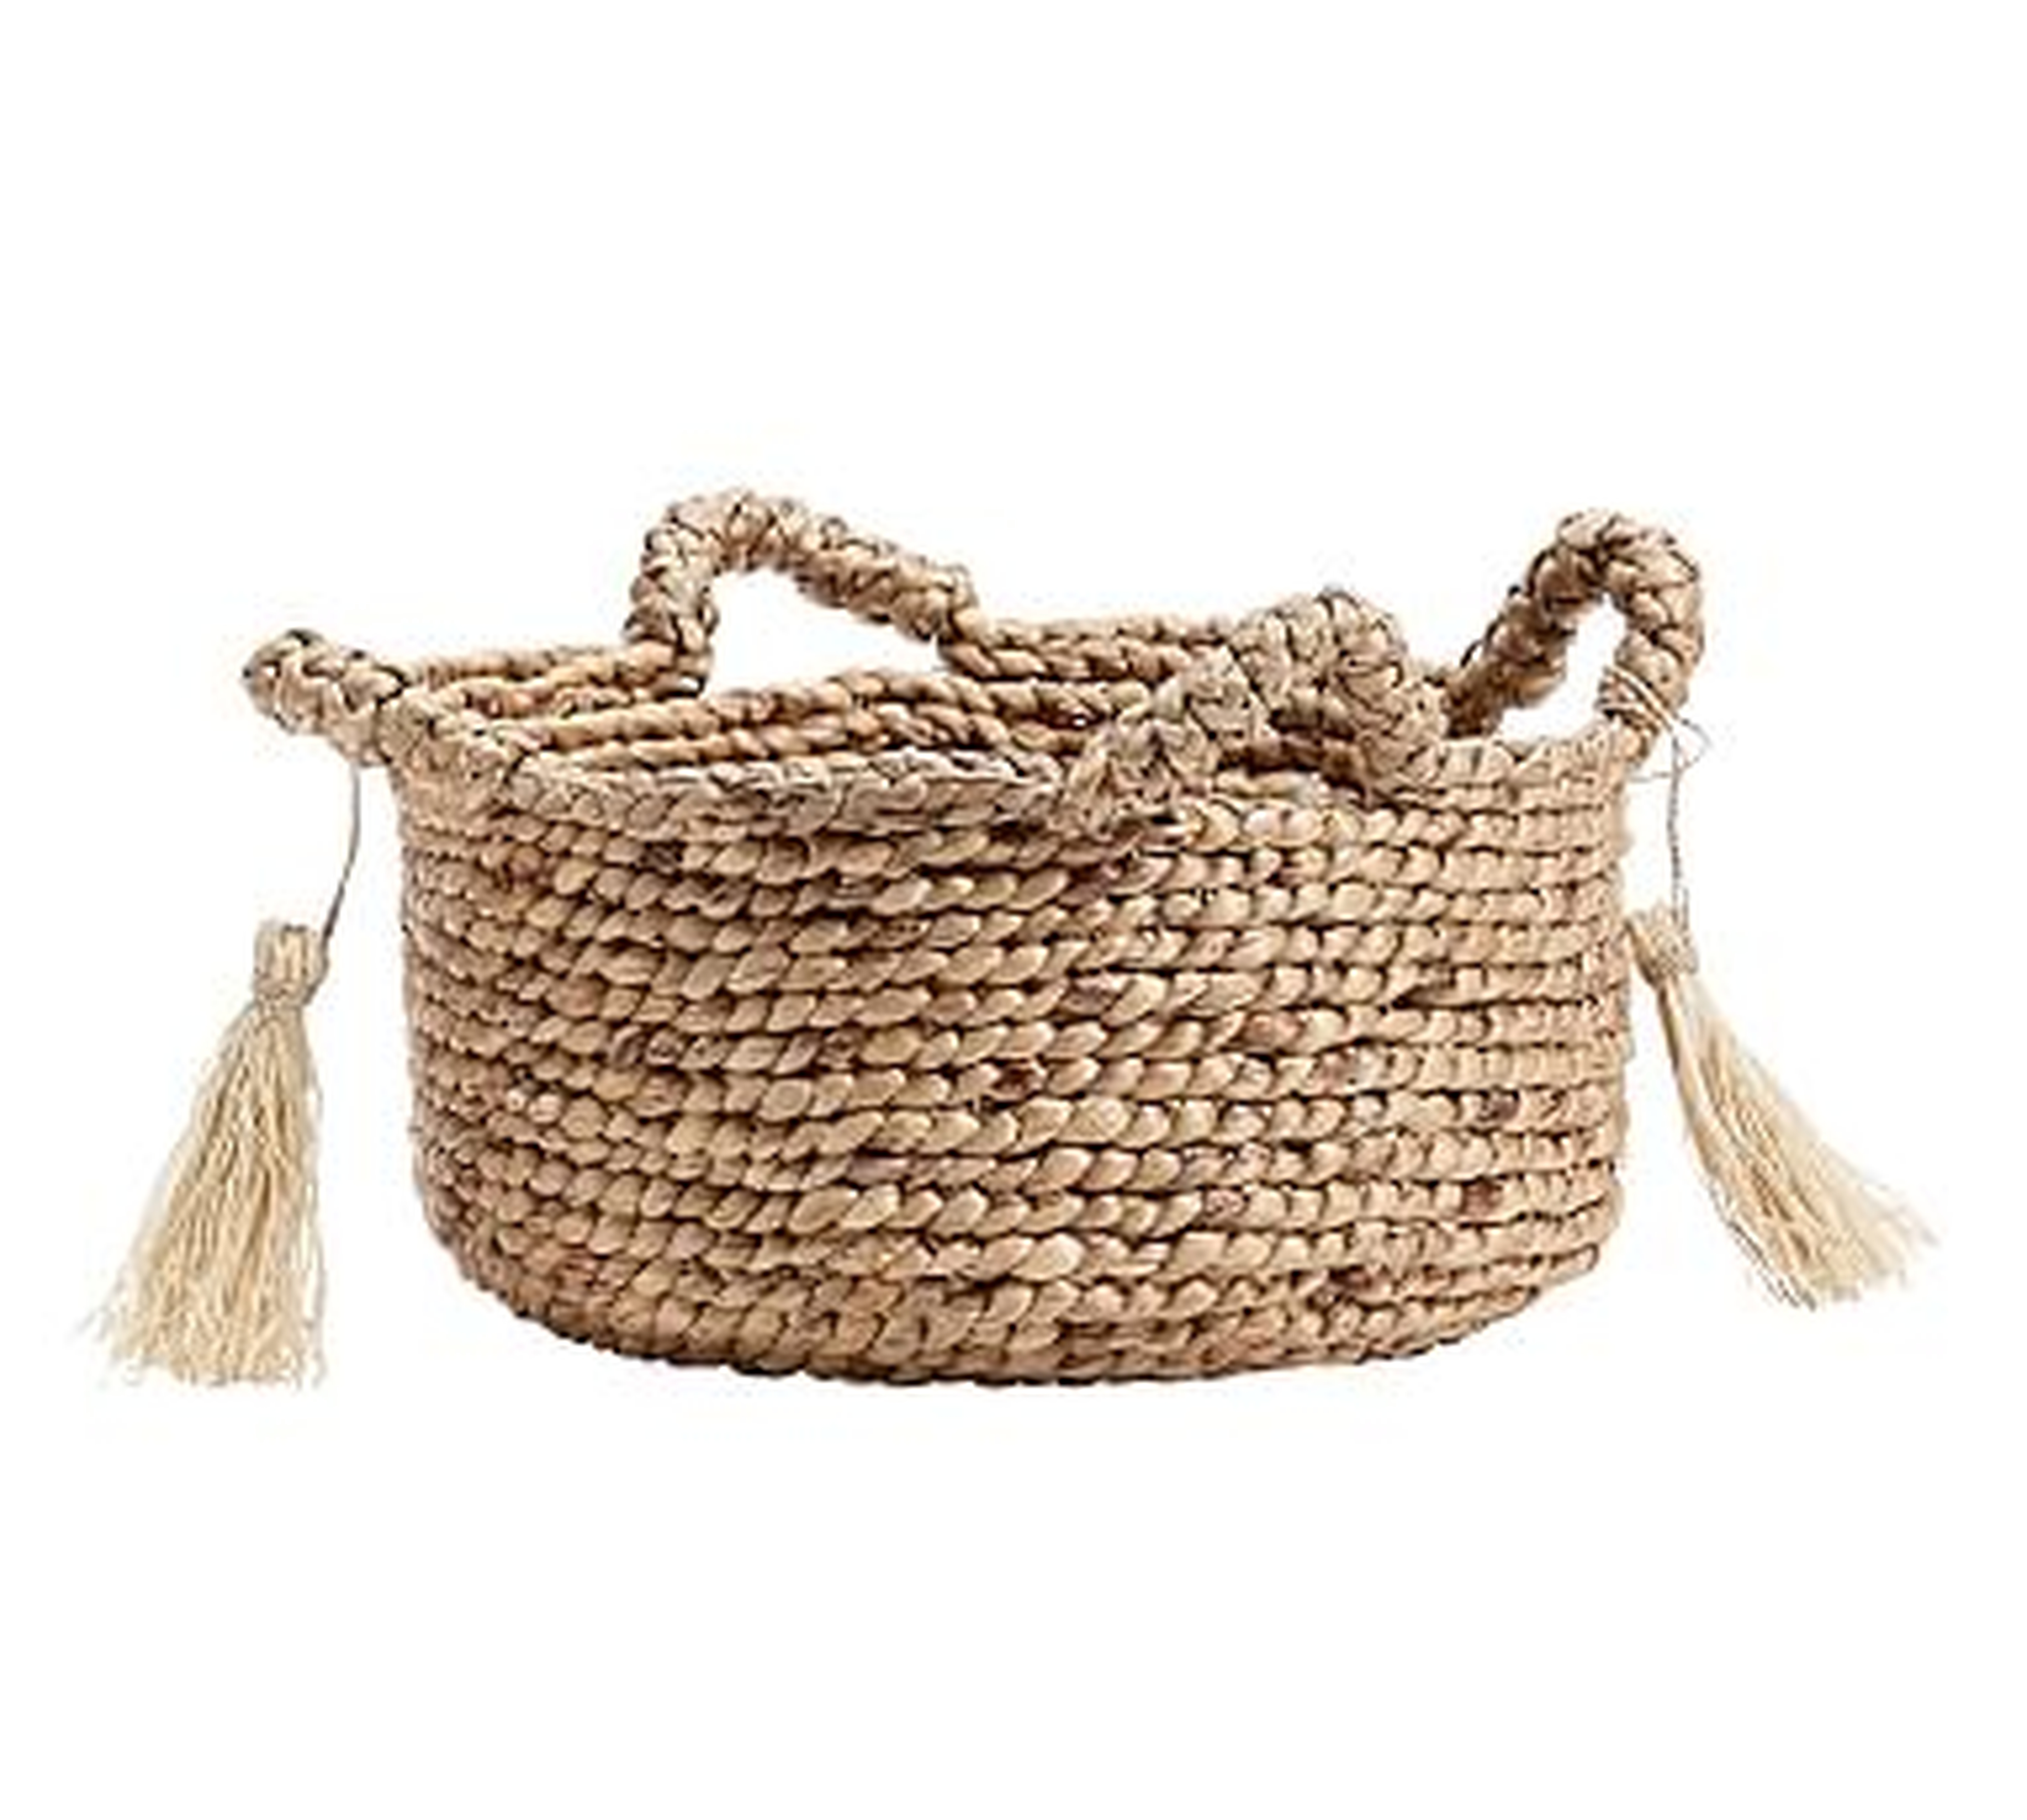 Palma Round Handled Seagrass Basket, Medium - Pottery Barn